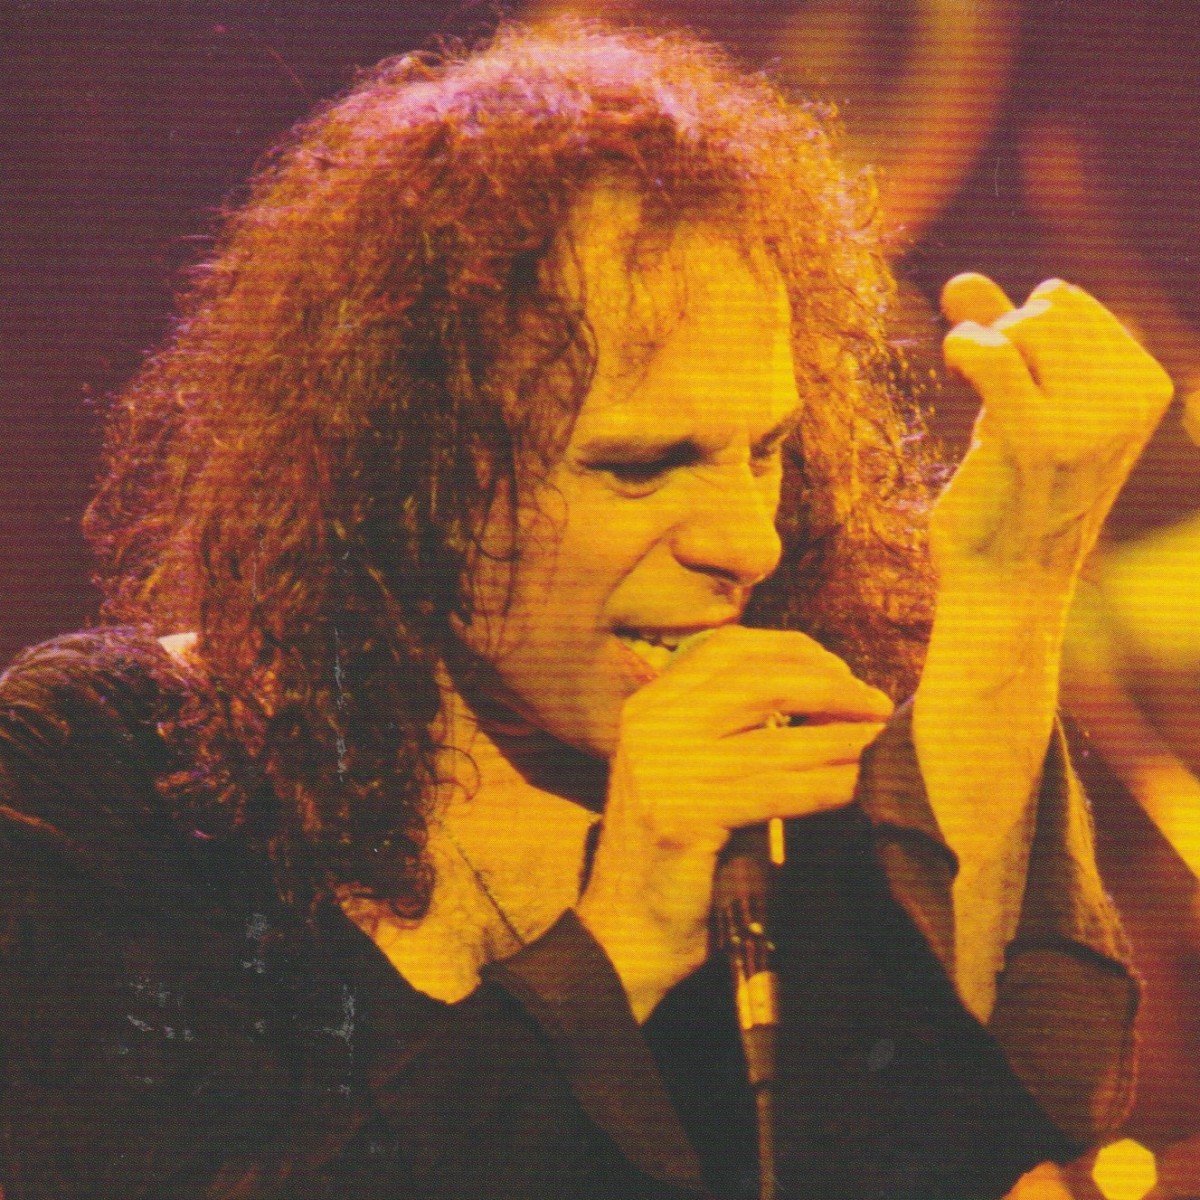 Dio 1993. Dio "Strange Highways". Dio Holy Diver Live 2006. Dio live